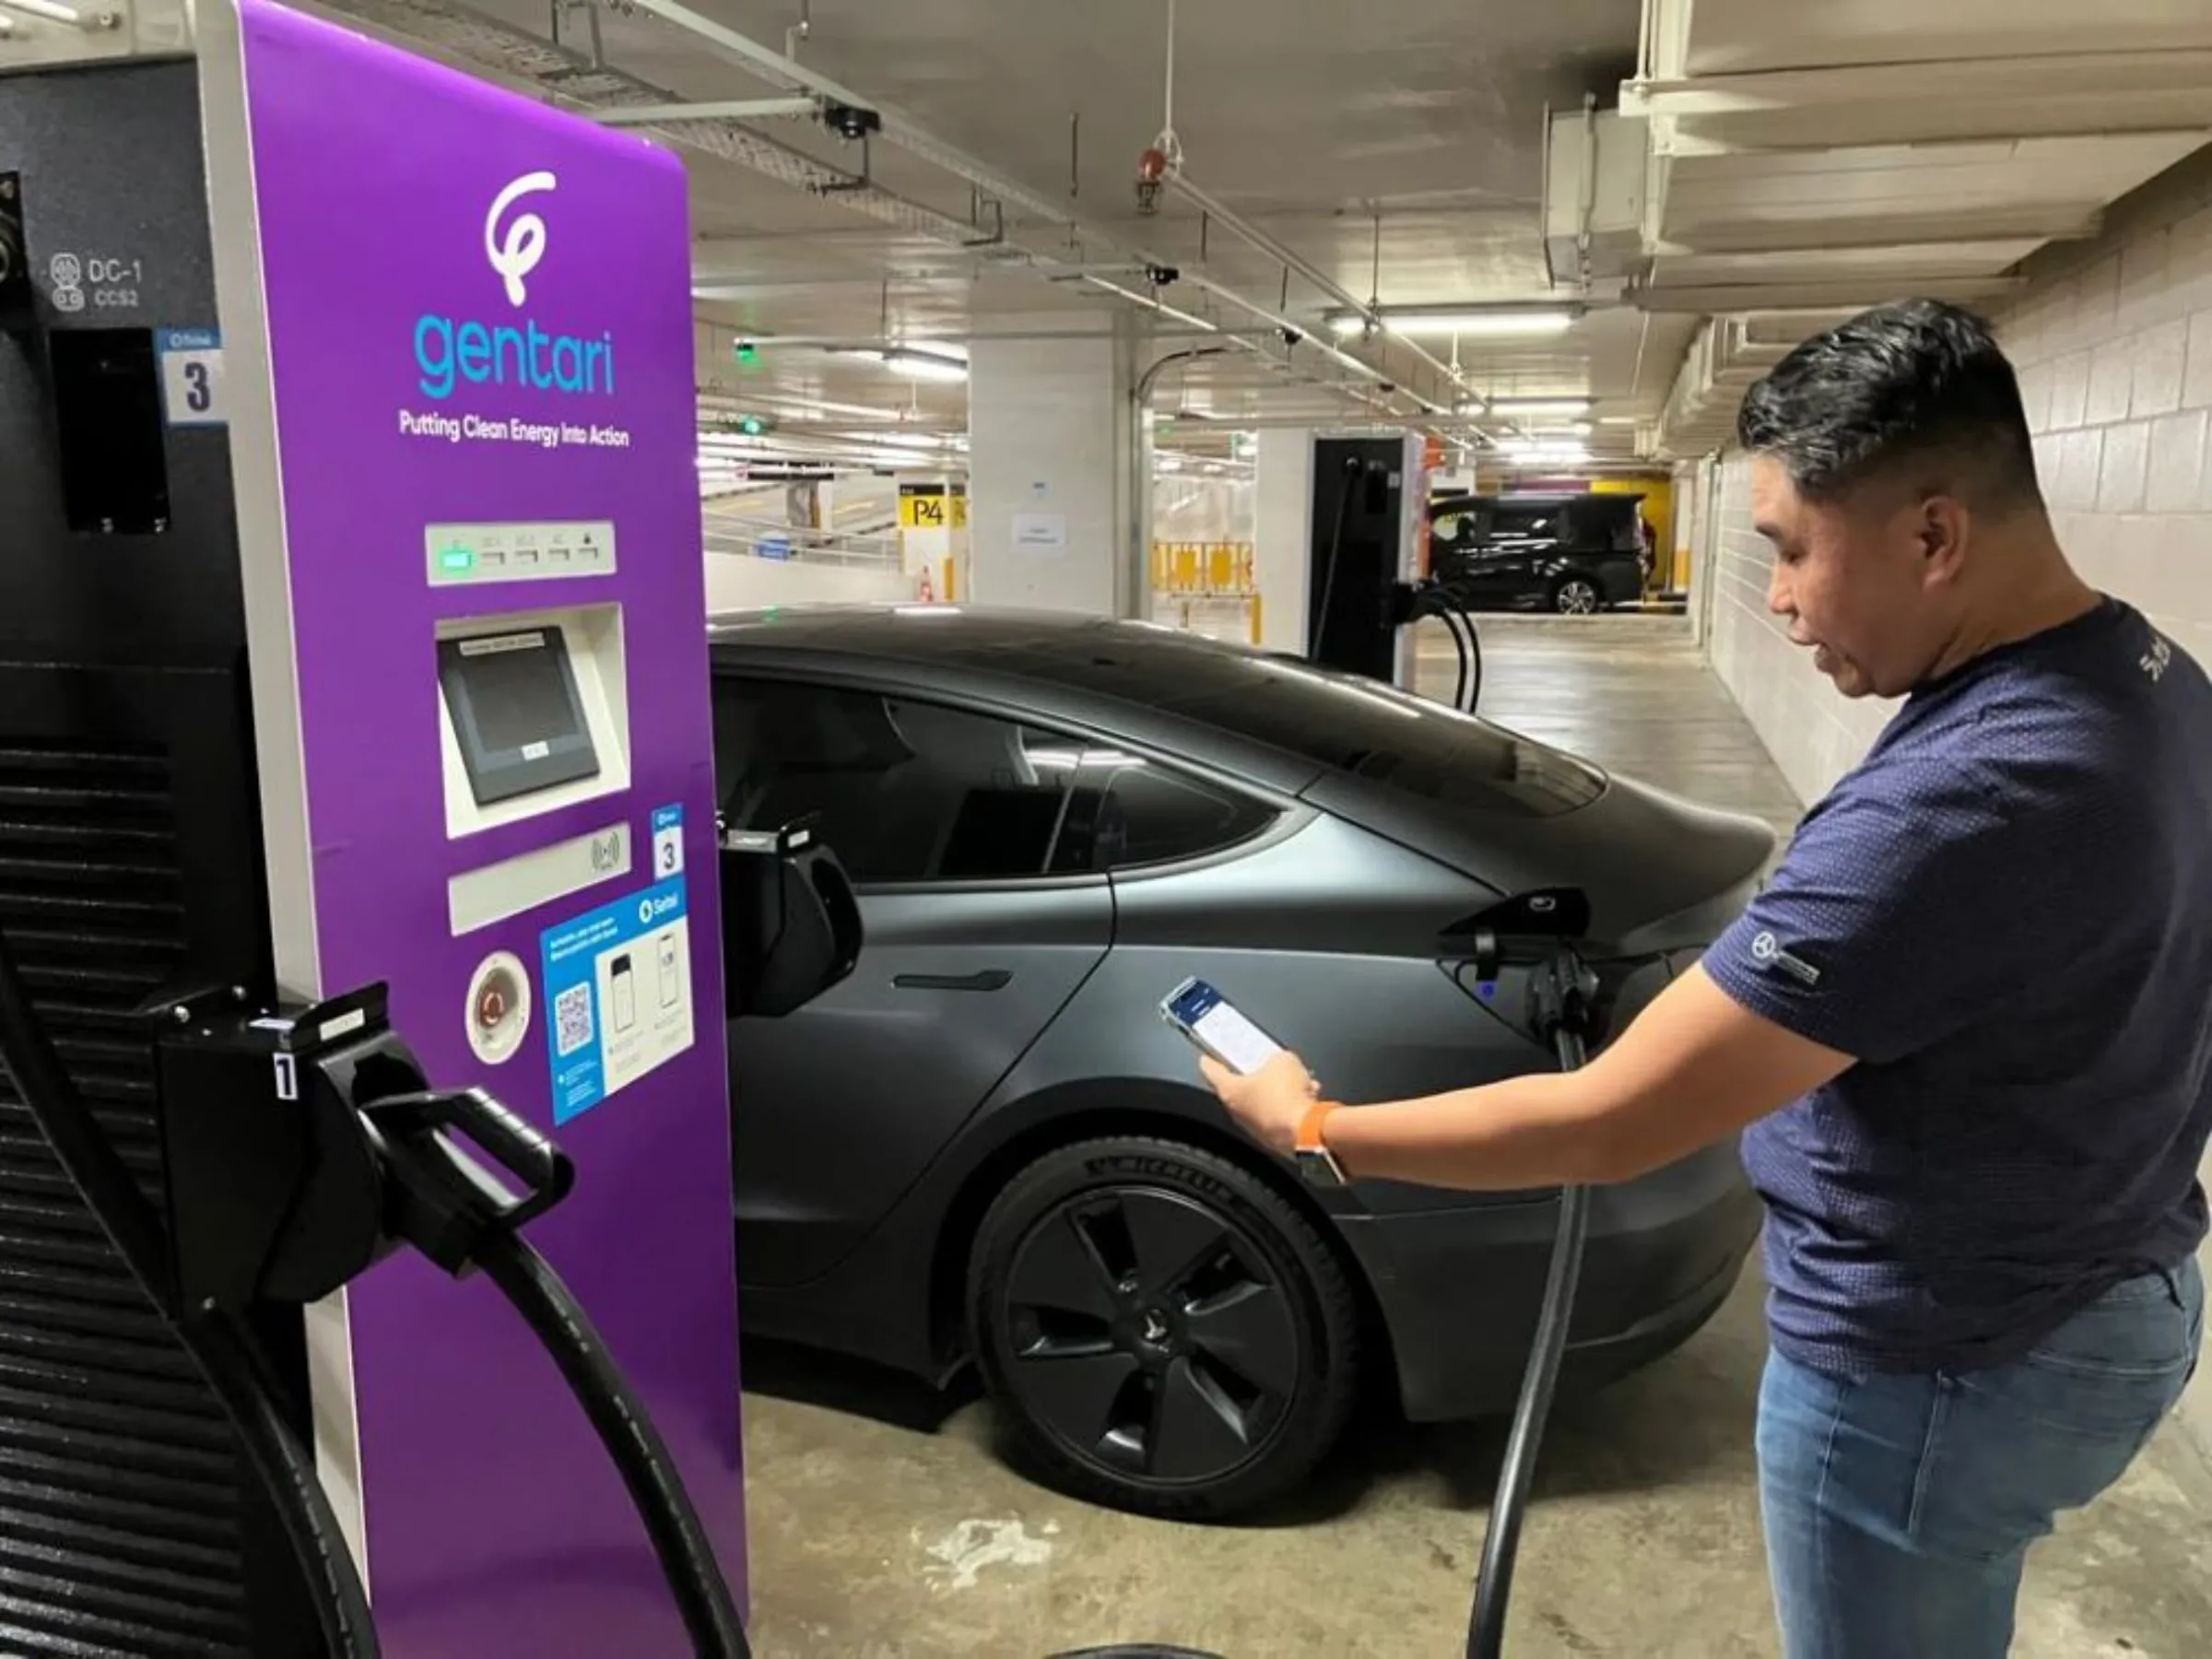 Malaysian Farhan Abdul Rahim charges his Tesla electric car in the car park under the iconic Petronas Twin Towers in Kuala Lumpur, Malaysia on Feb 15, 2023